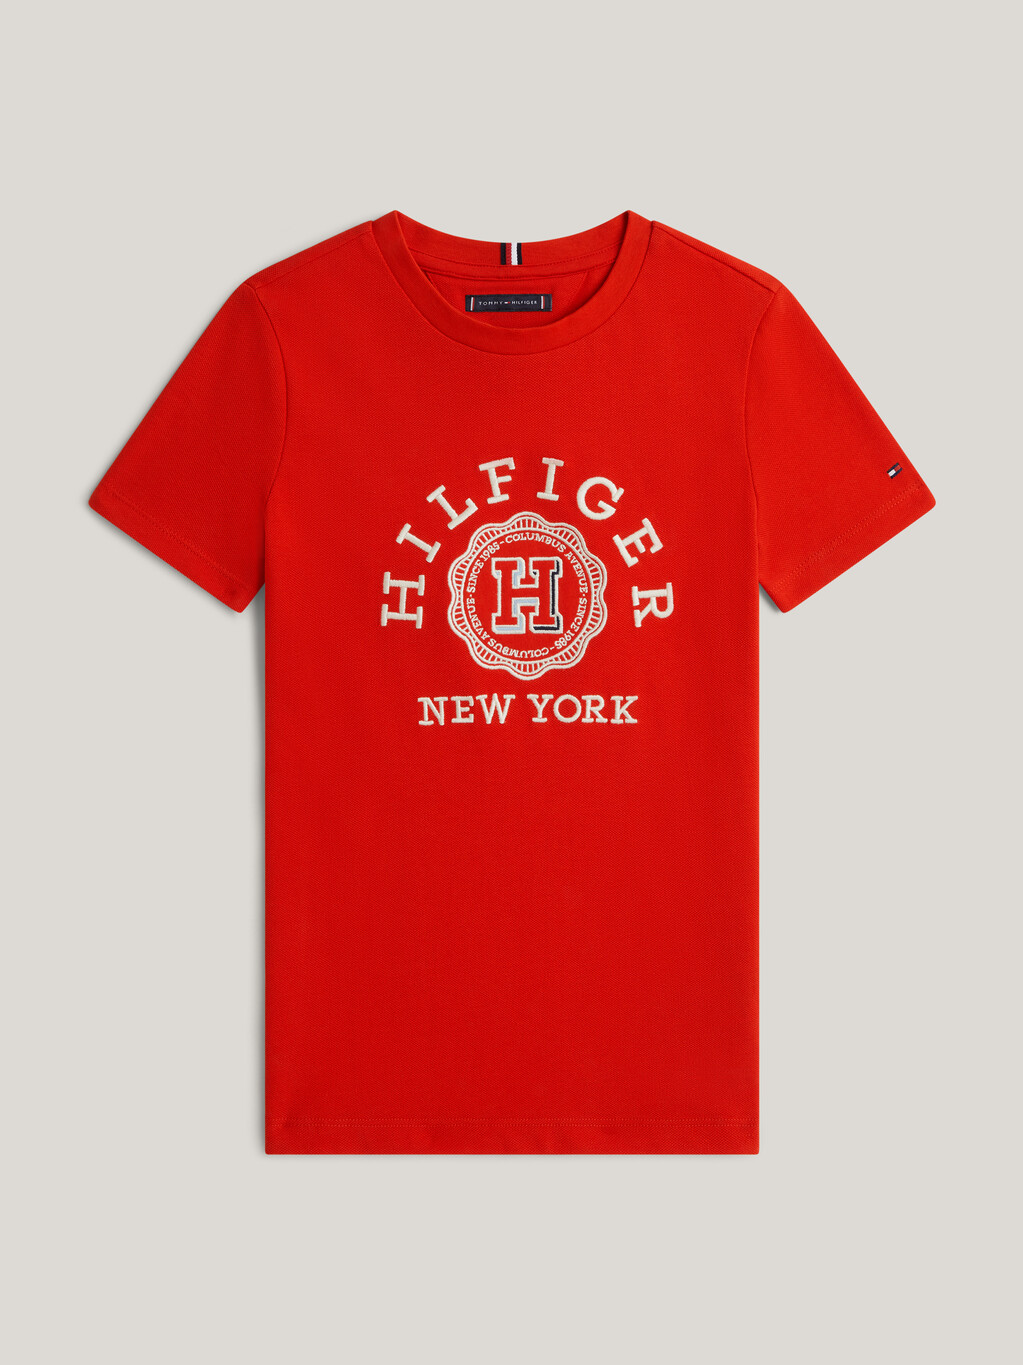 Hilfiger Monotype Archive 徽章Logo刺繡 T 恤, Fierce Red, hi-res